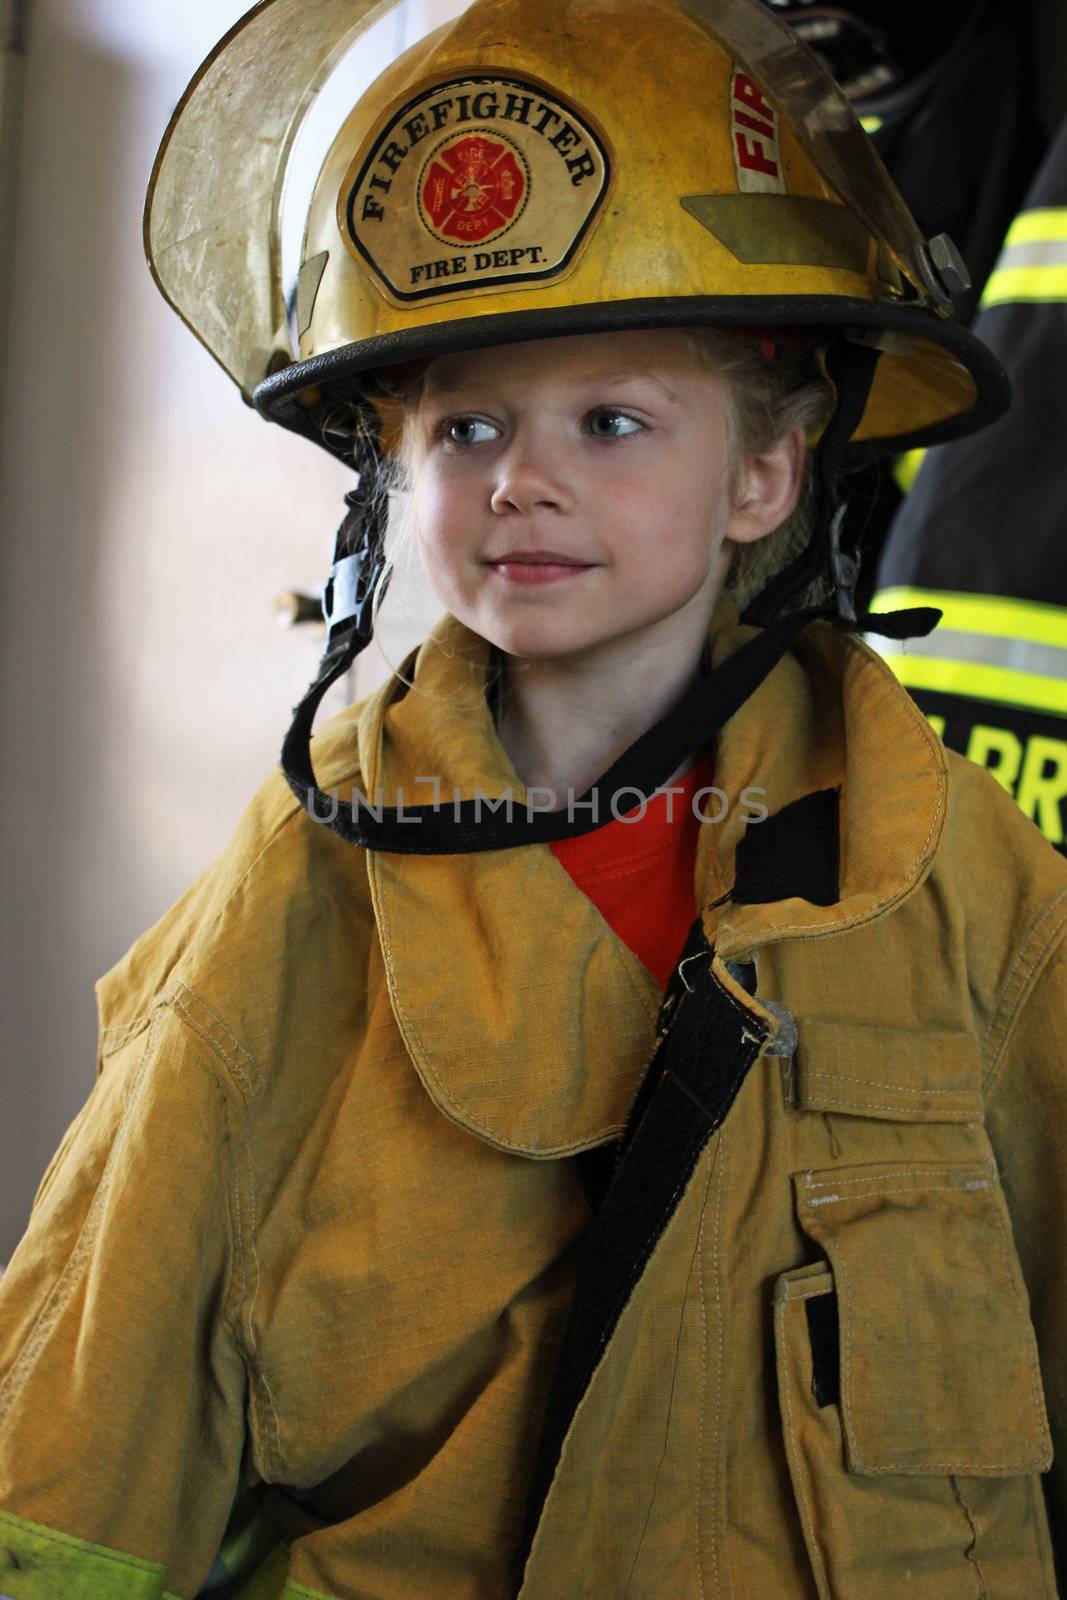 Young girl in fireman gear by mahnken